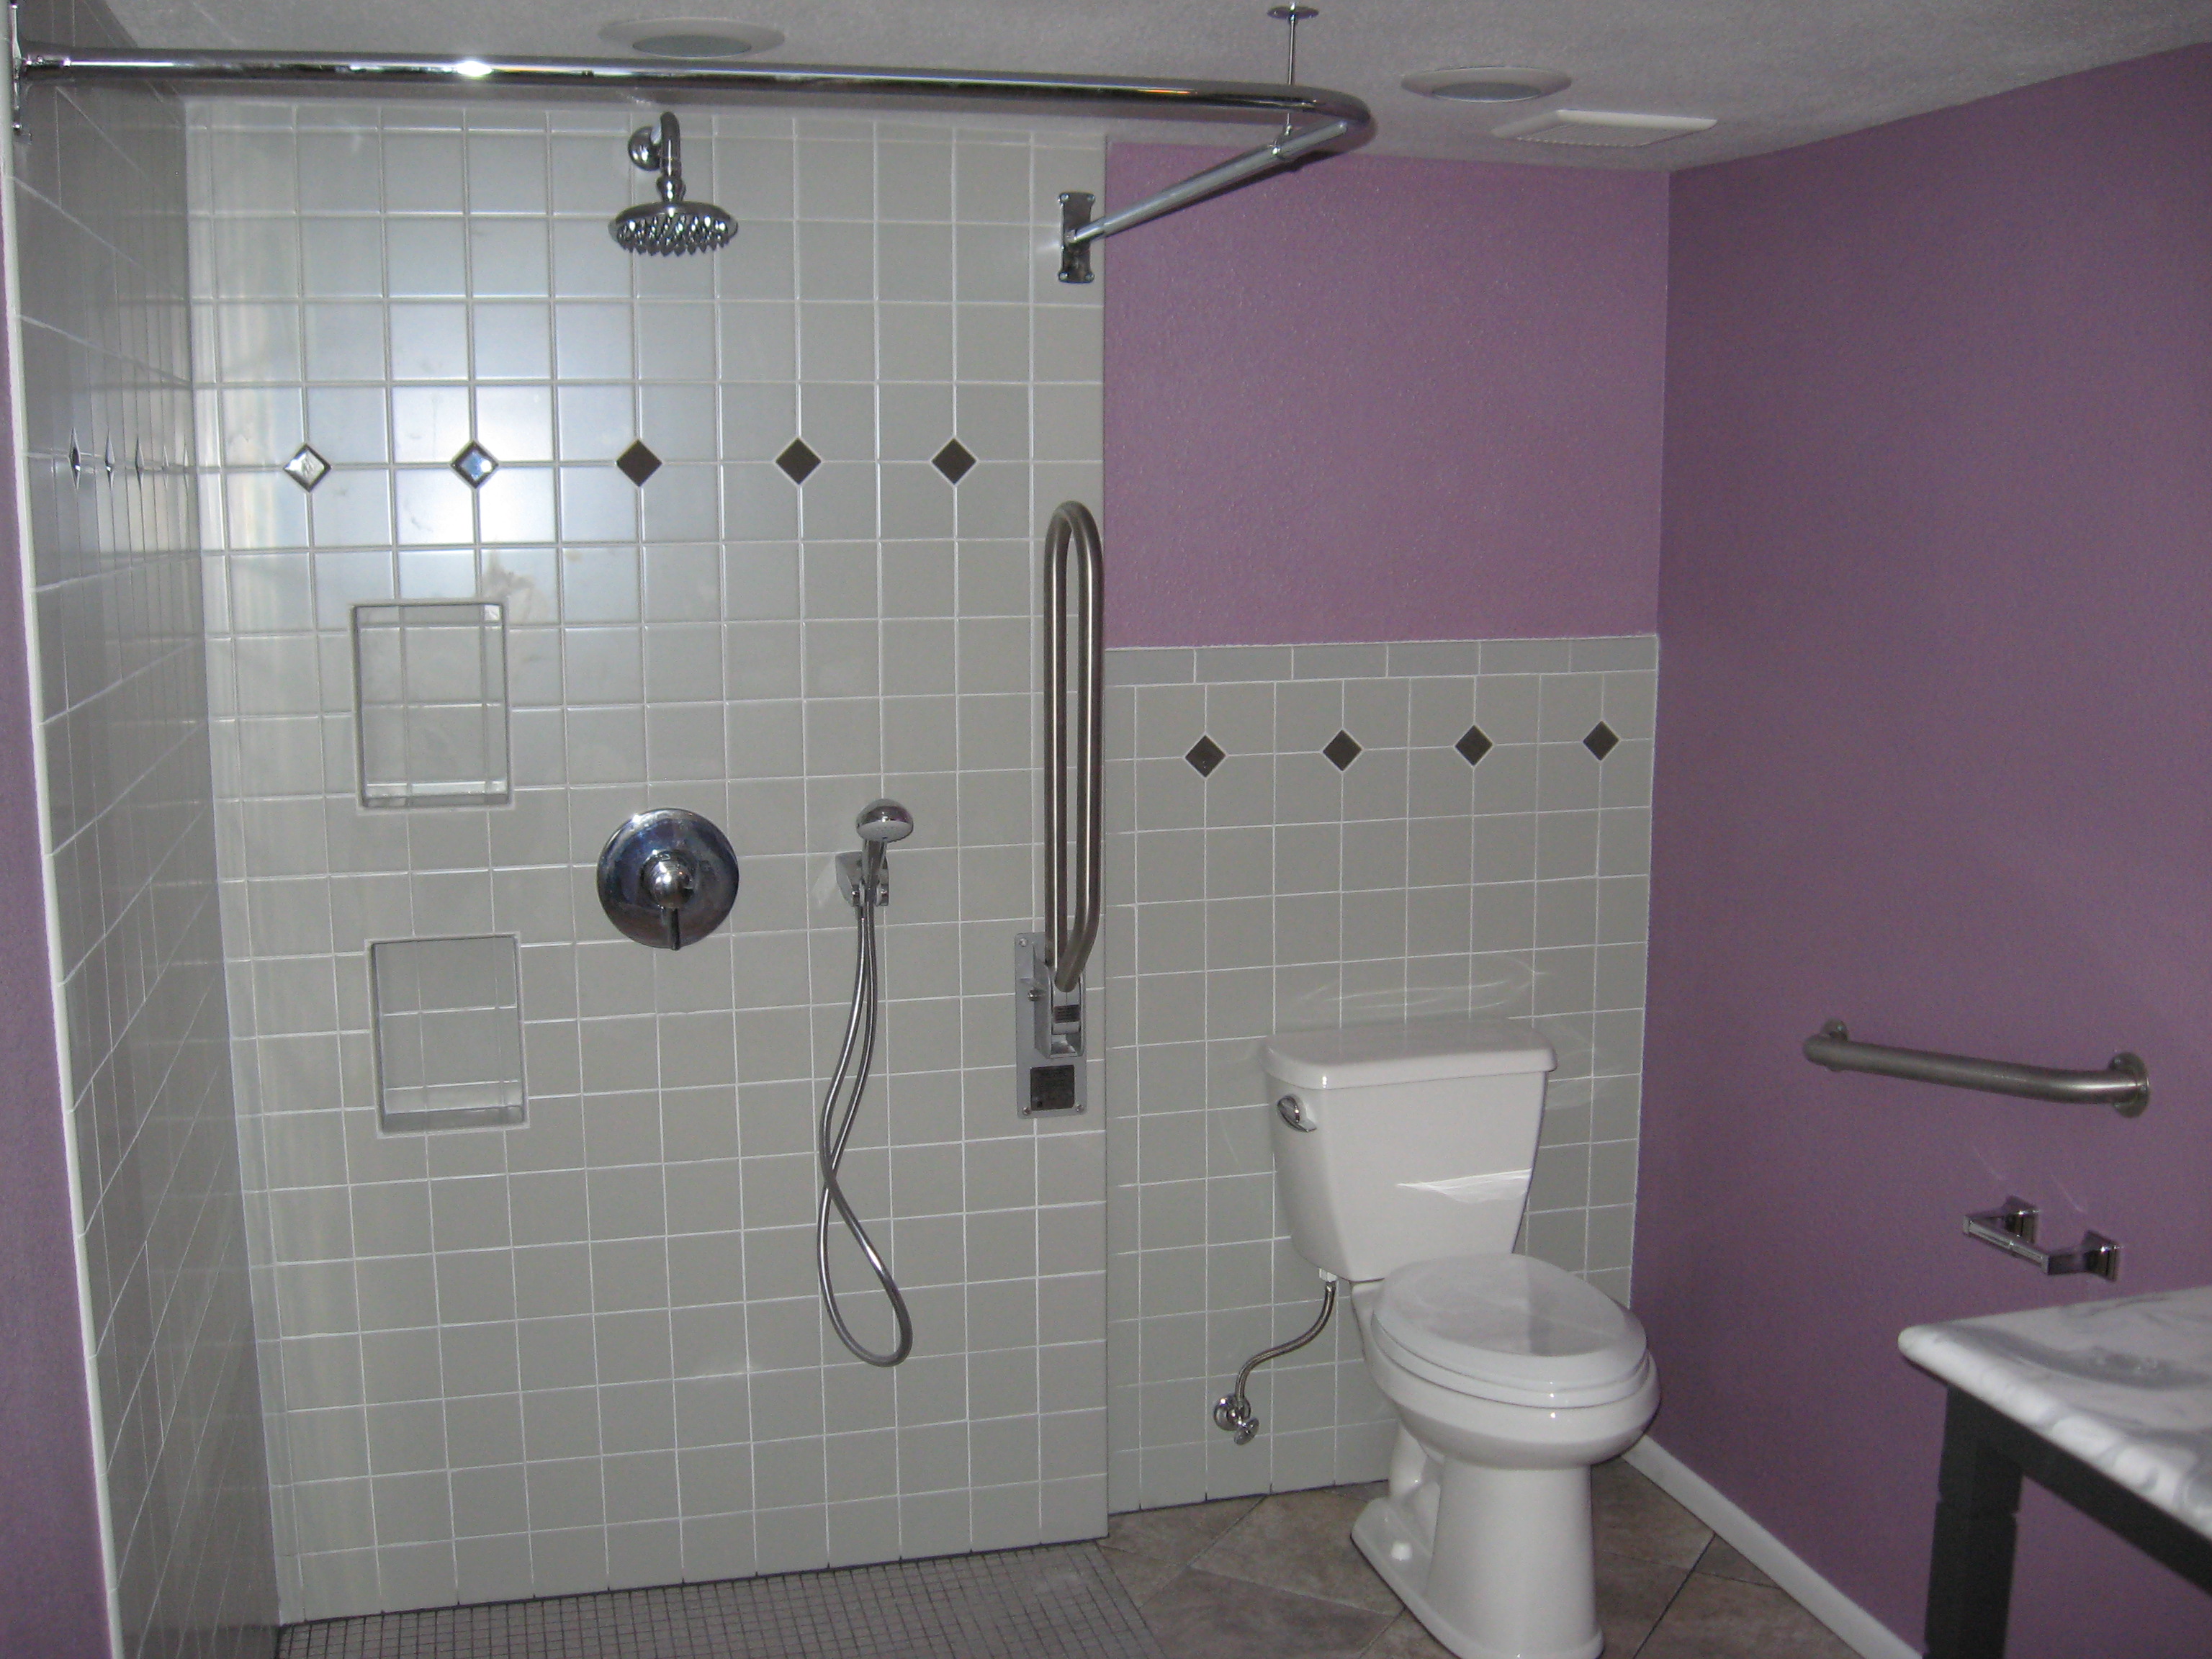 tiled bathroom shower and toilet image